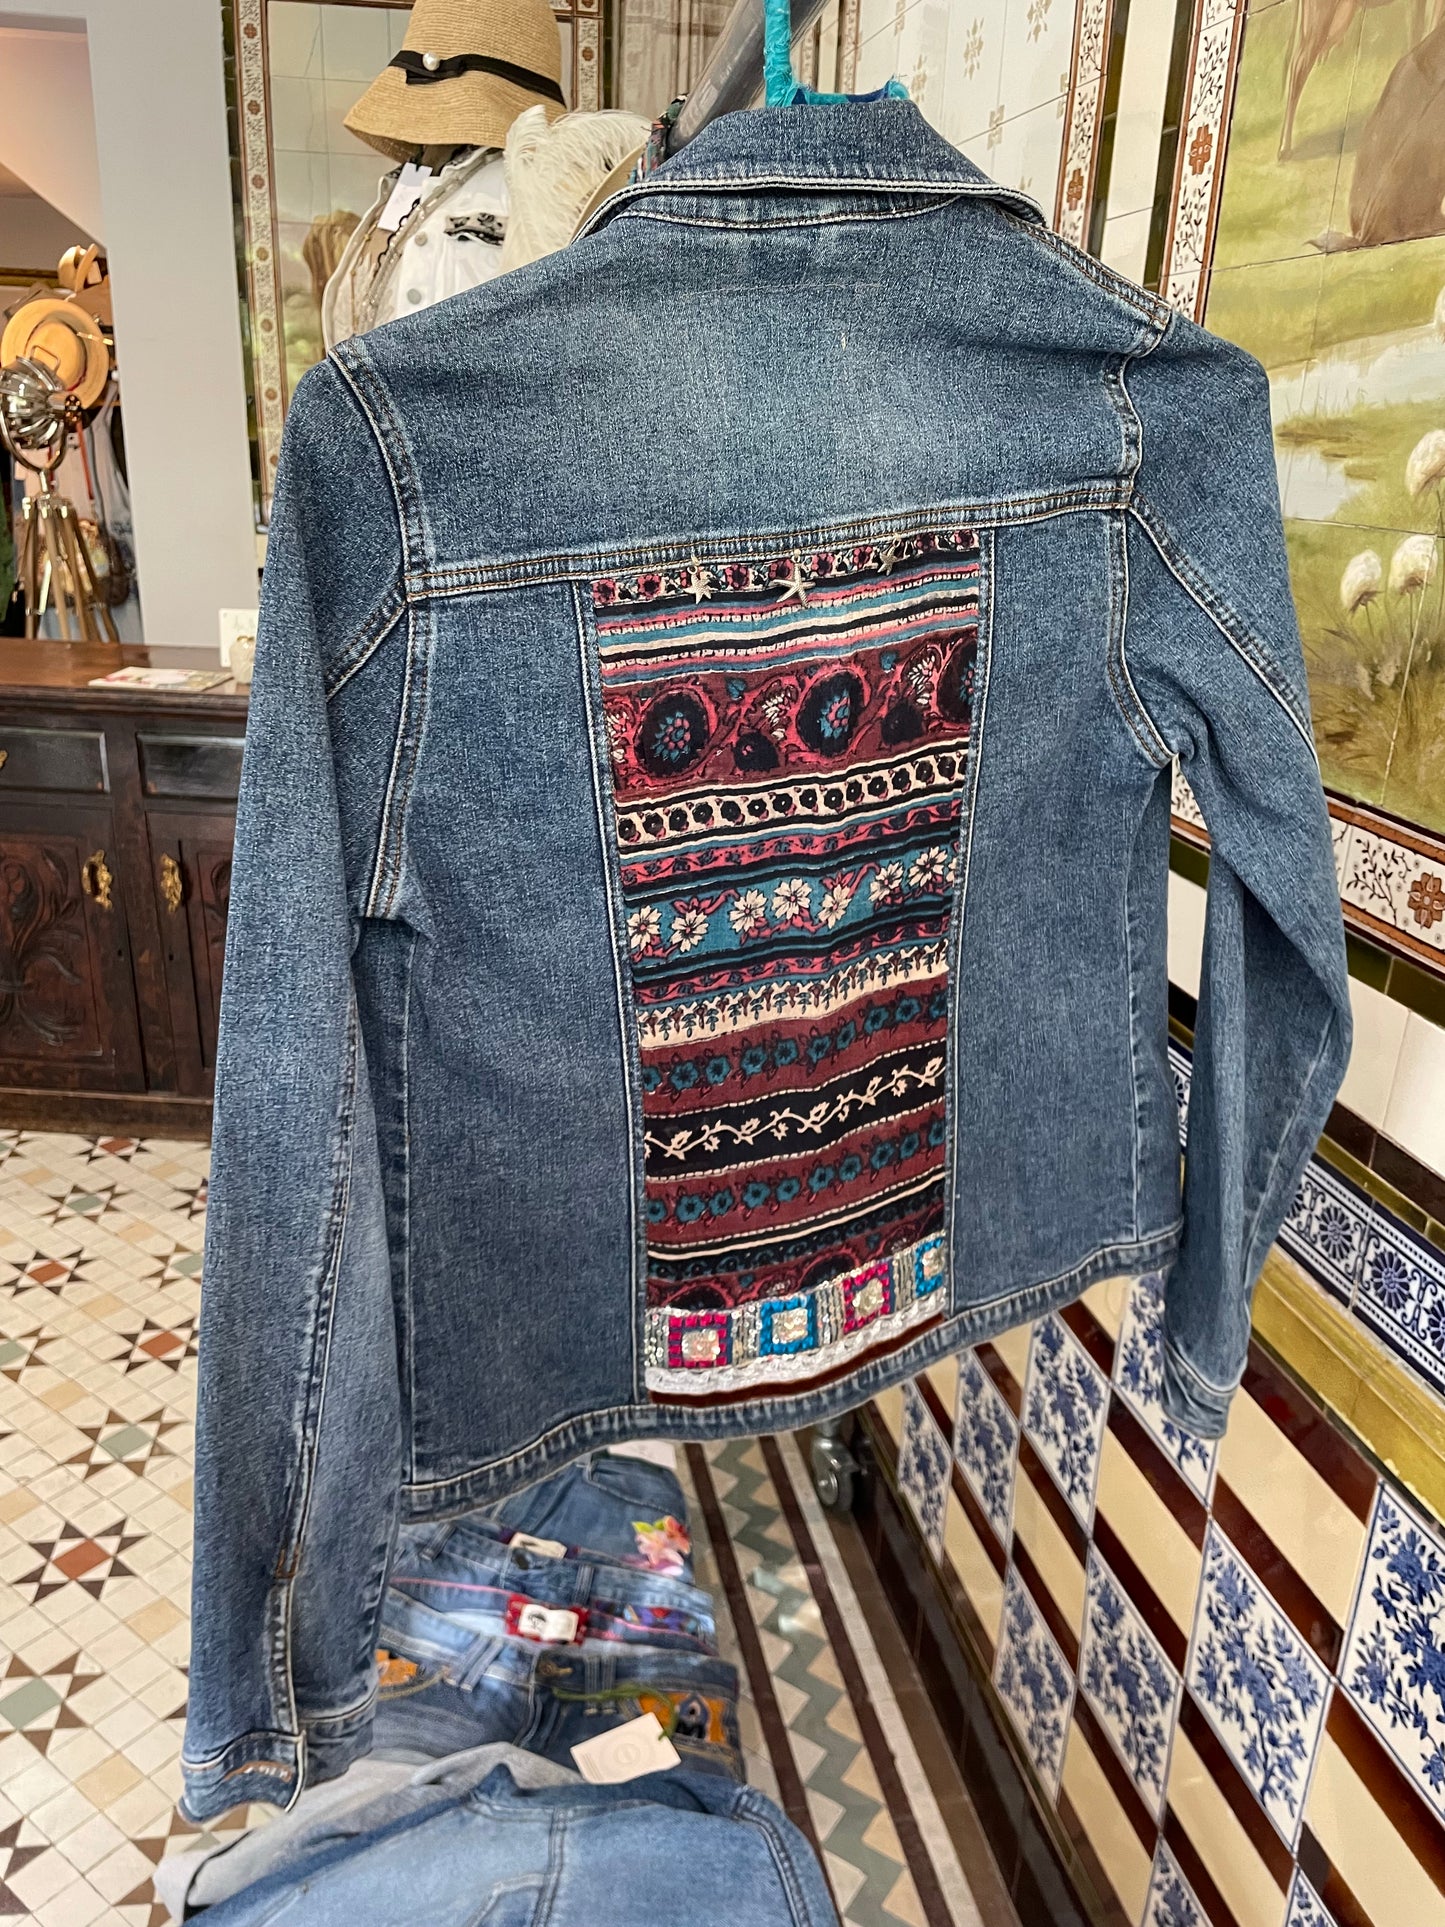 An Upcycled Denim Jacket from mpira.